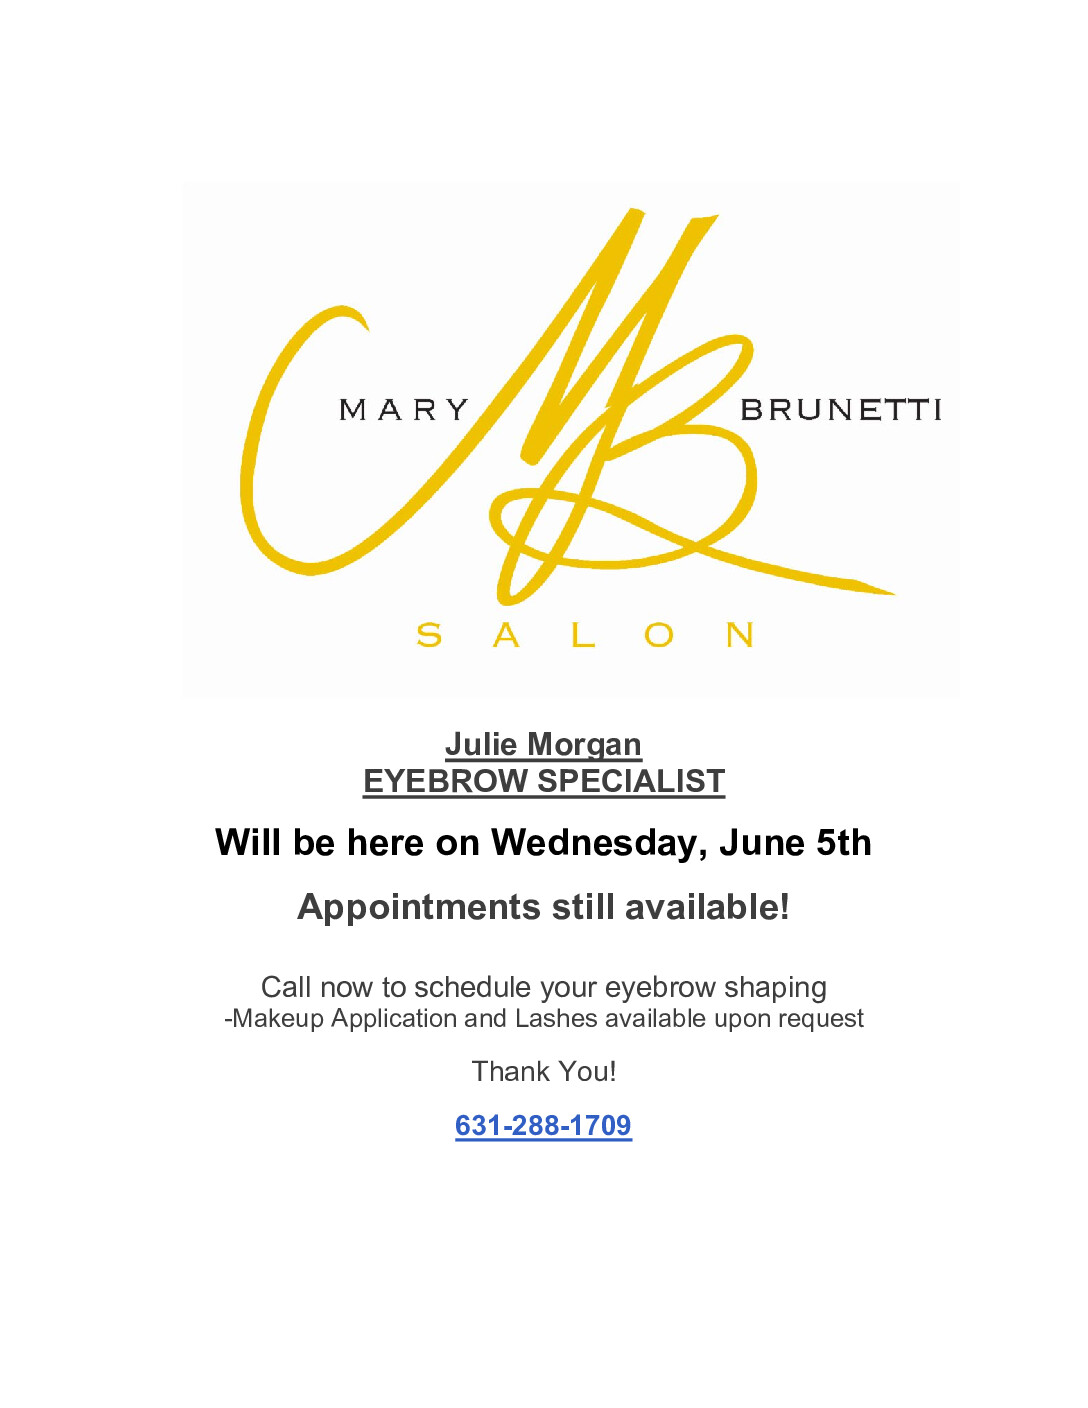 Mary Brunetti Salon - Special Eyebrow Event